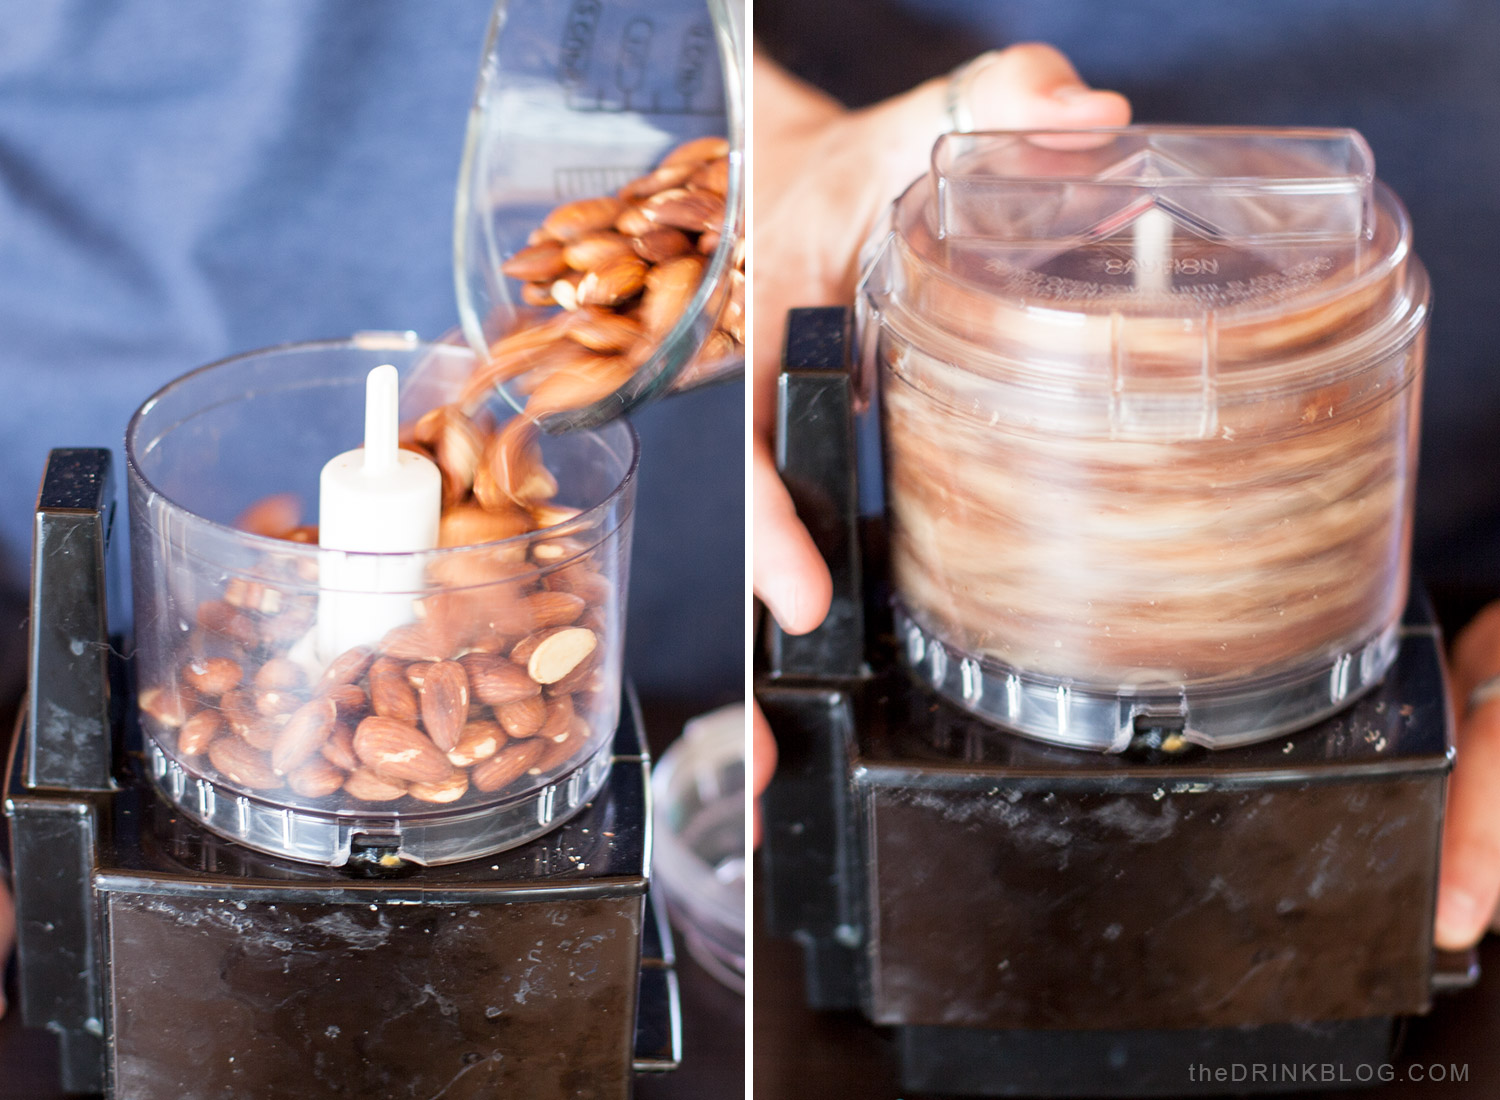 Chop the almonds in a food processor